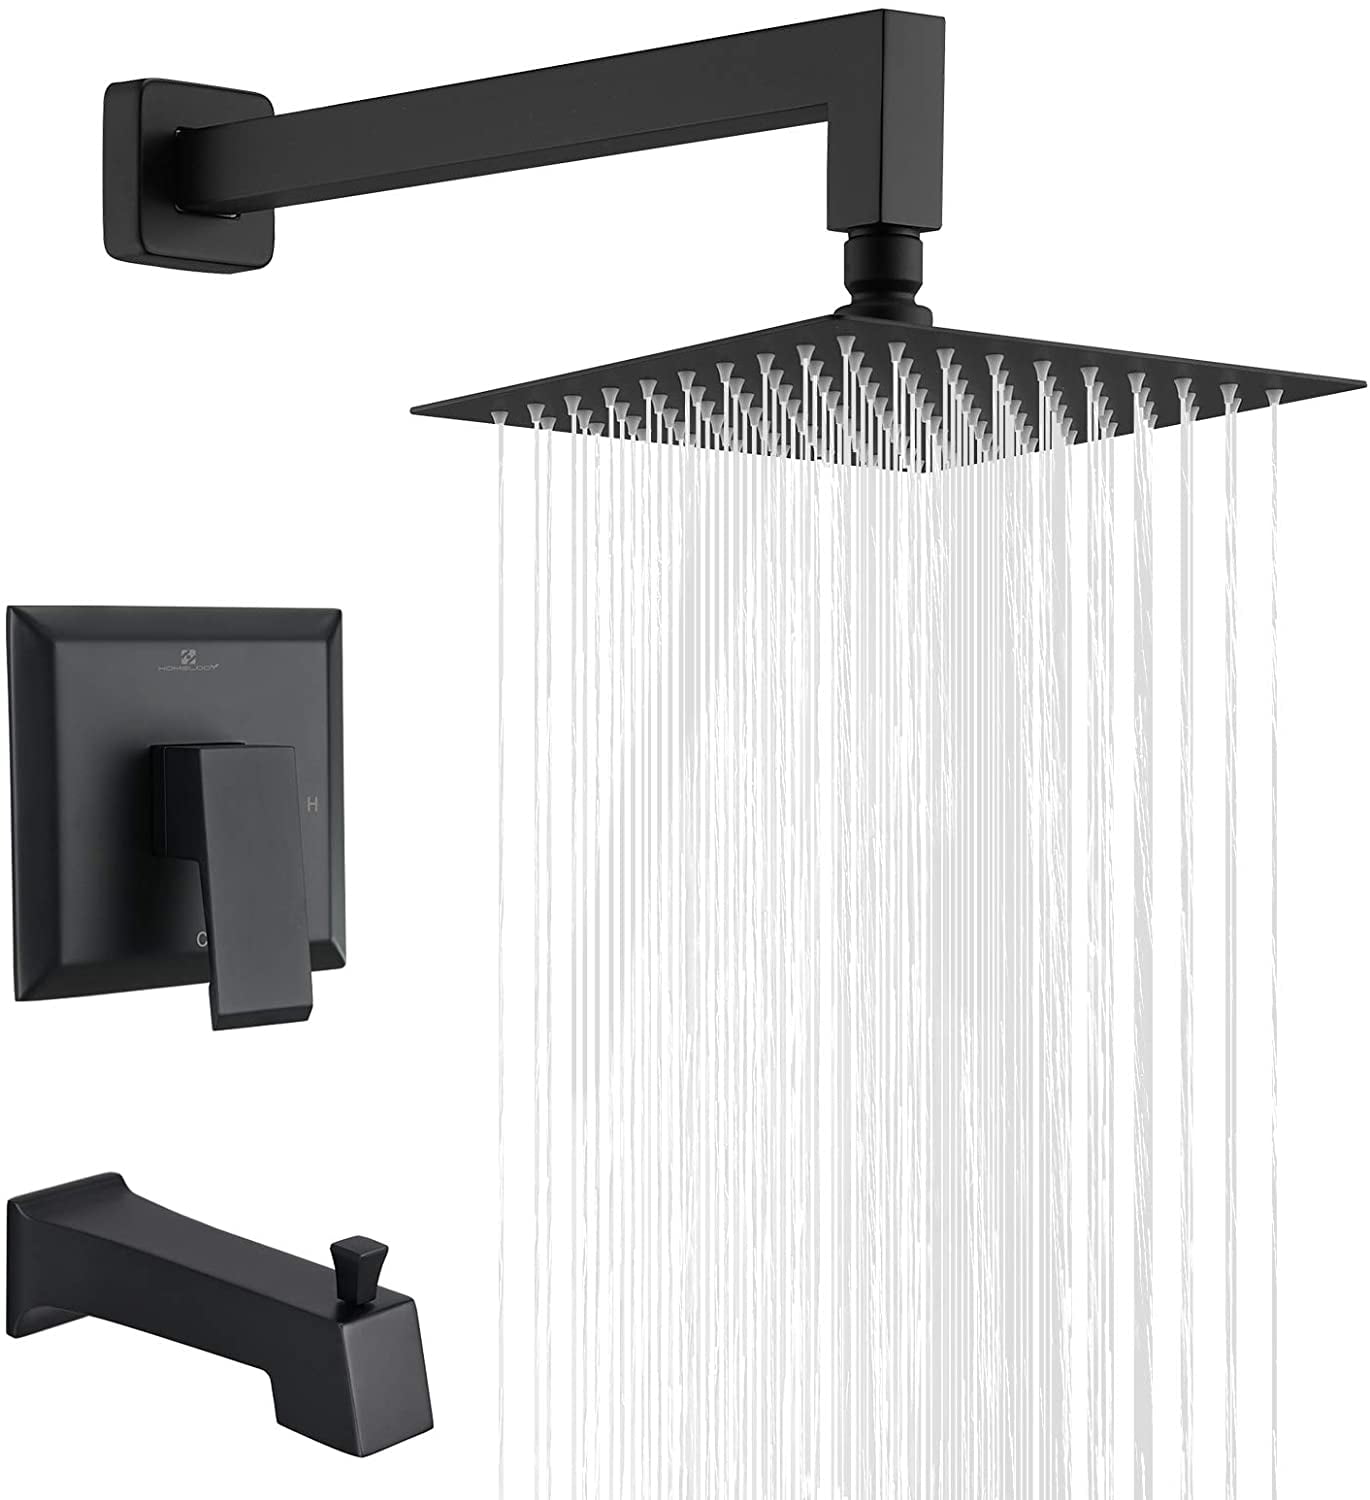 Homelody Matte Black Shower Faucet Set, Shower Head That Connects To Bathtub Faucet